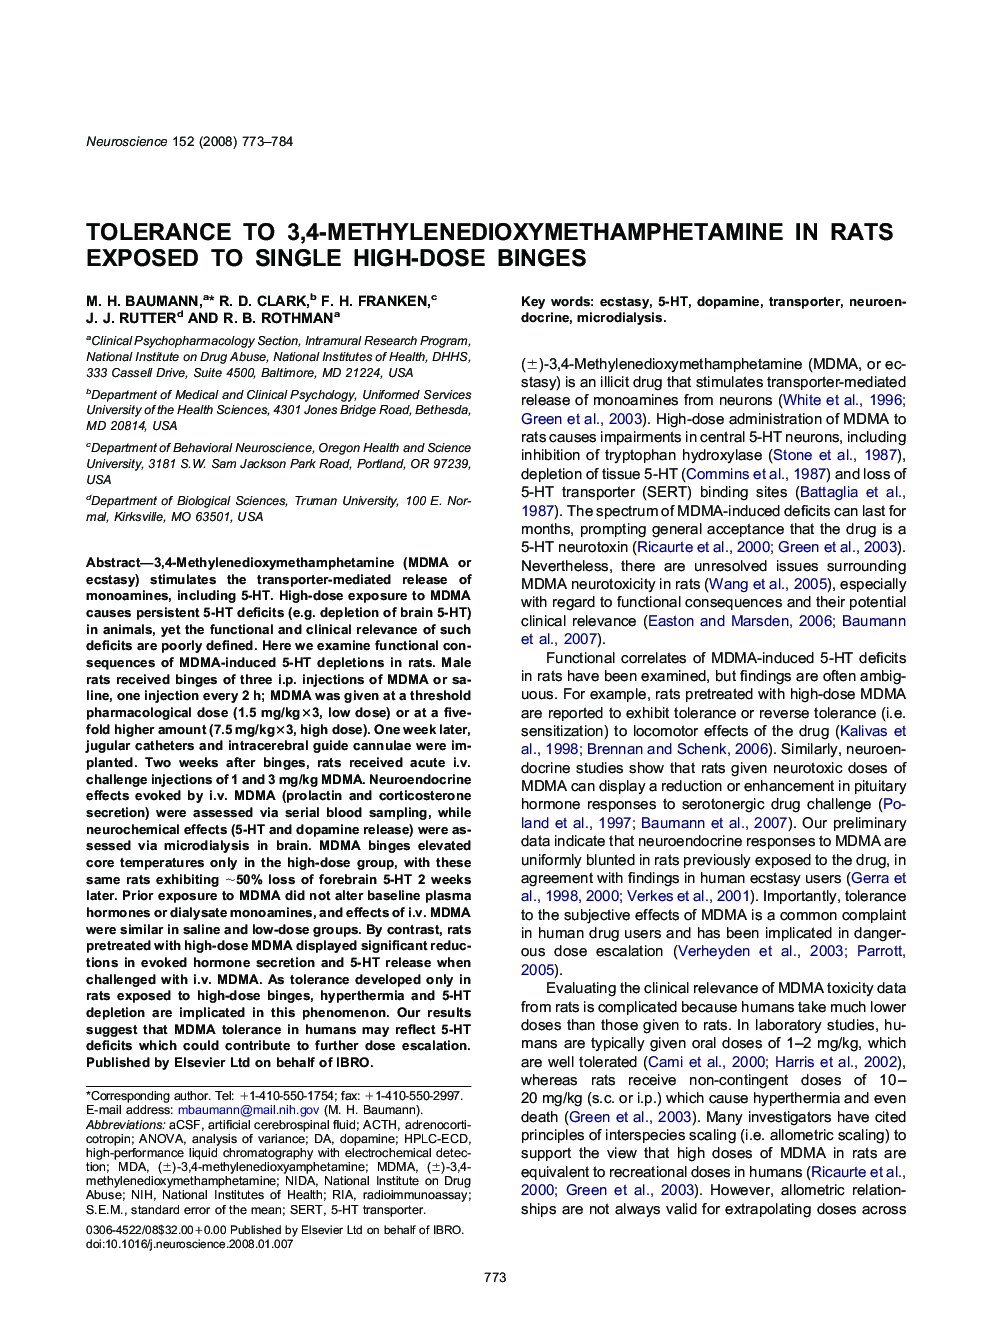 Tolerance to 3,4-methylenedioxymethamphetamine in rats exposed to single high-dose binges